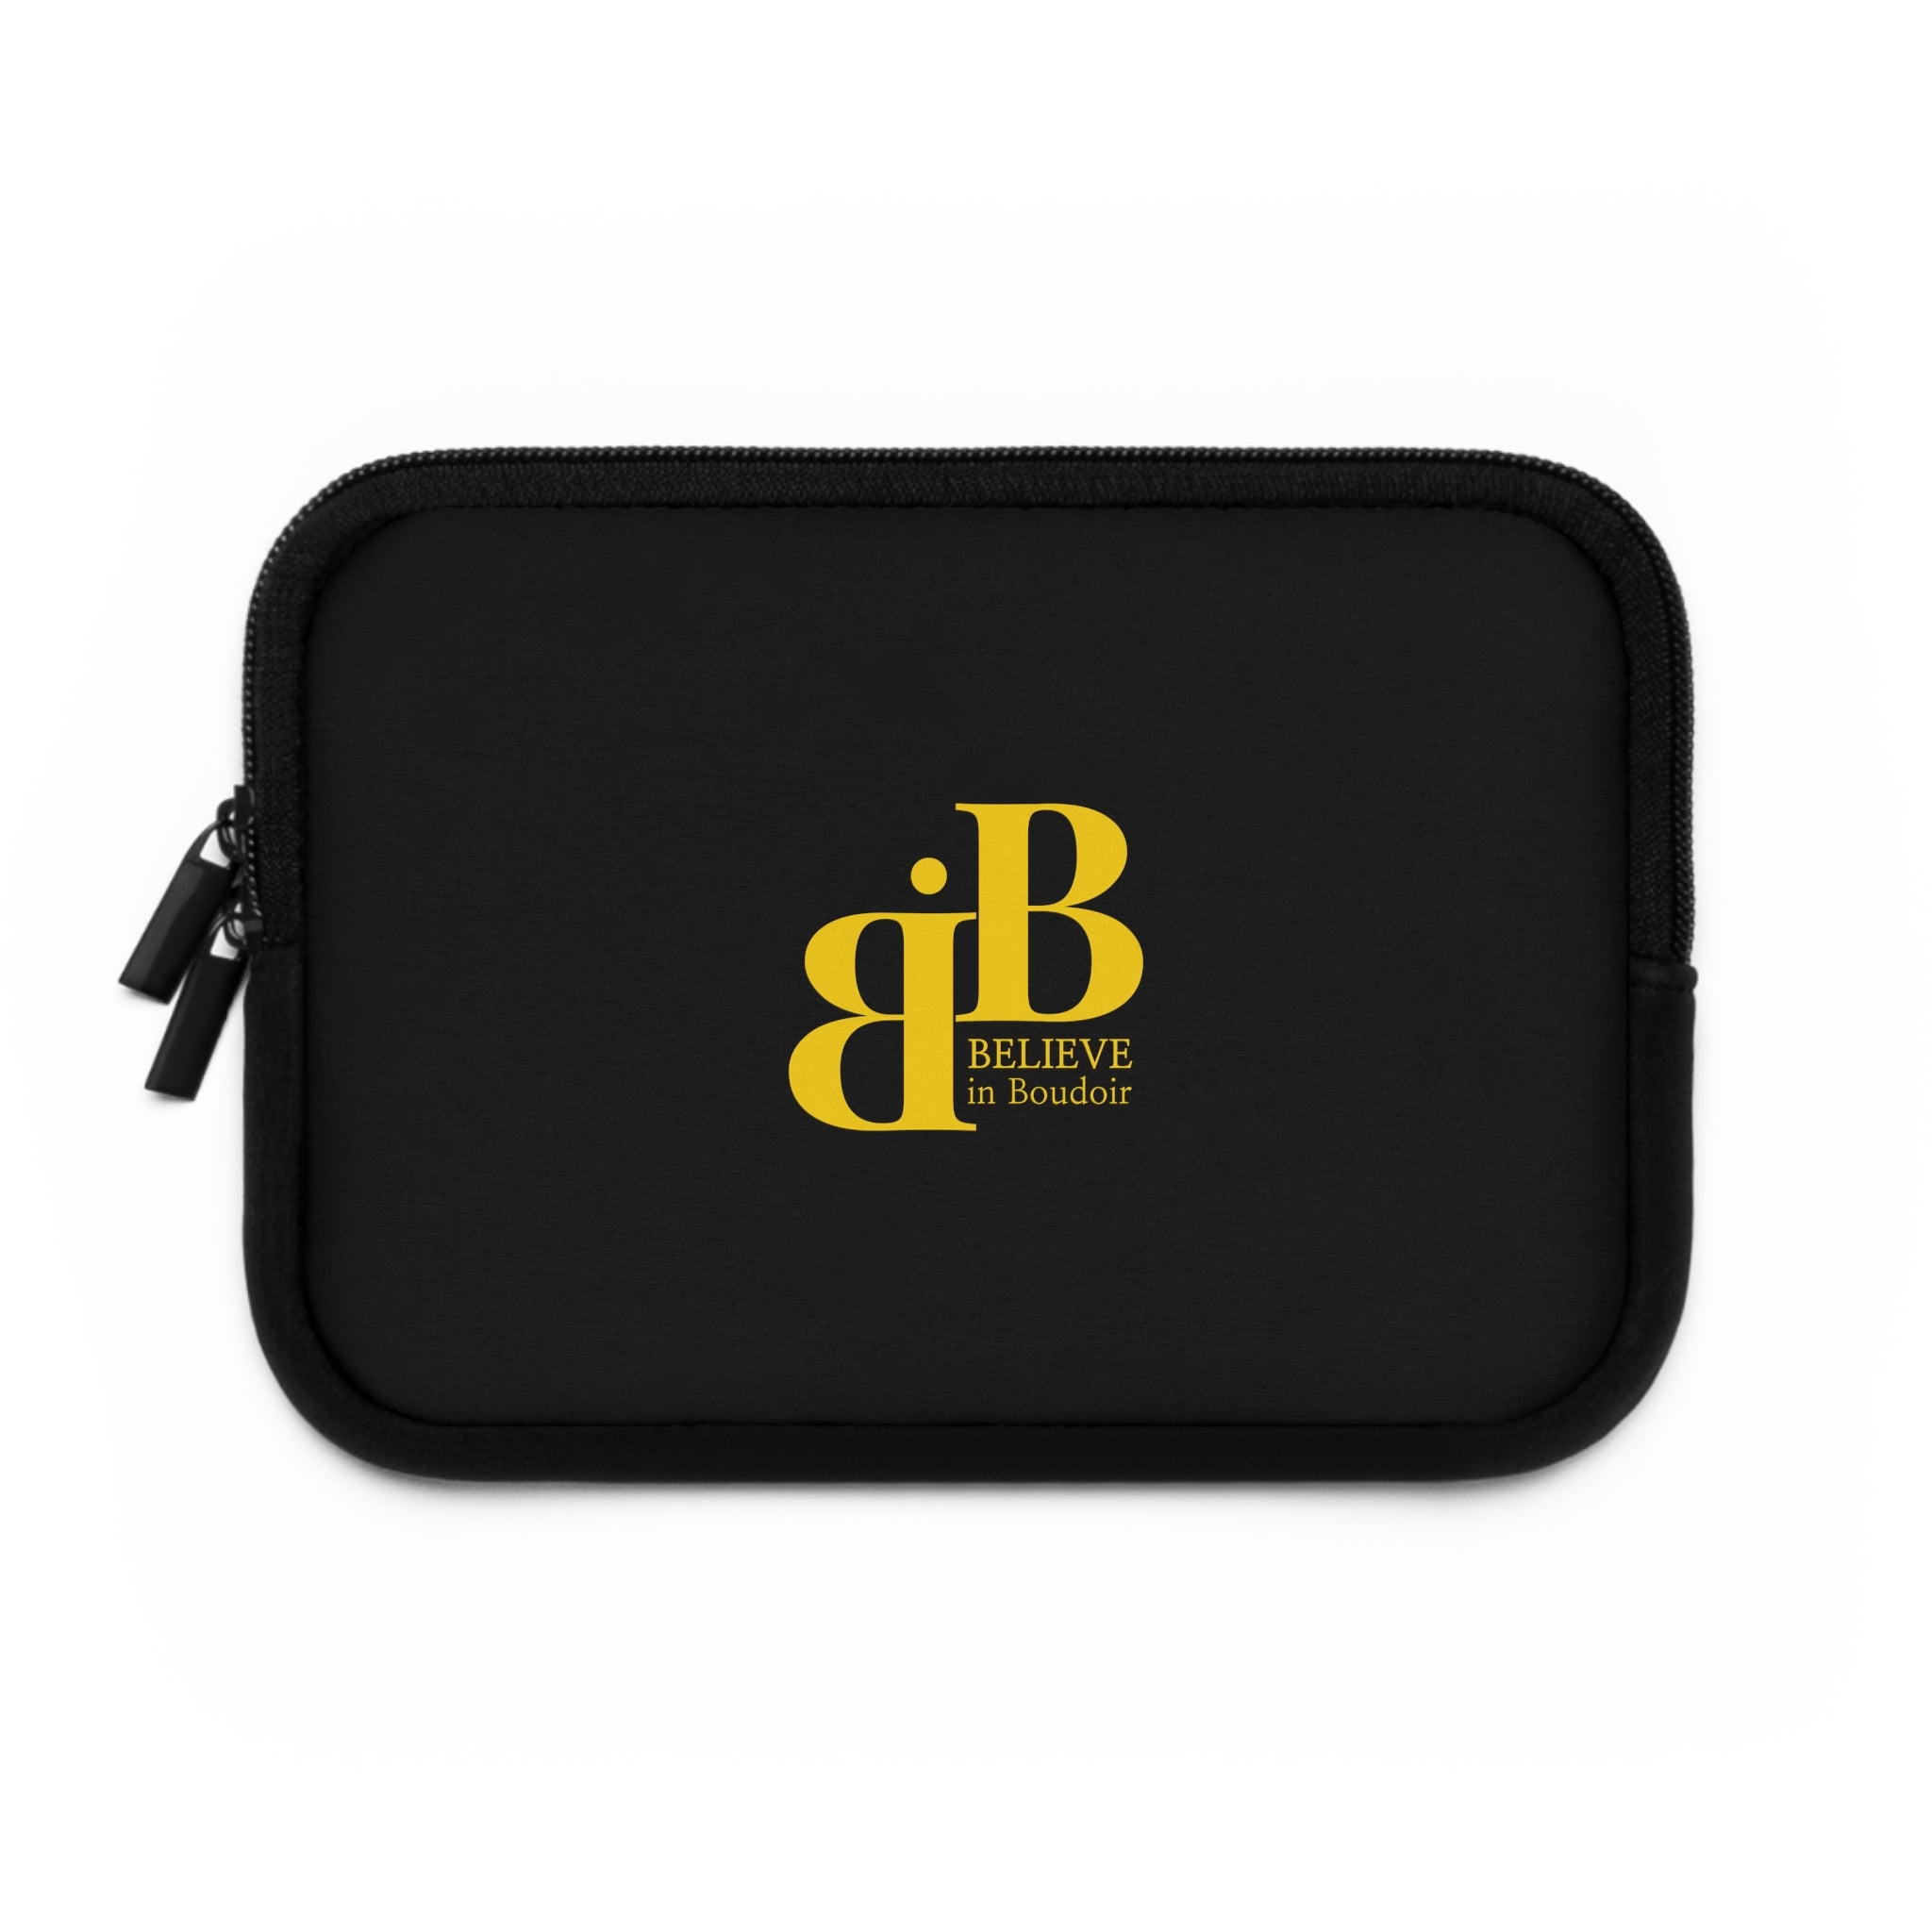 Believe in Boudoir Black Laptop Sleeve with Yellow BIB Logo